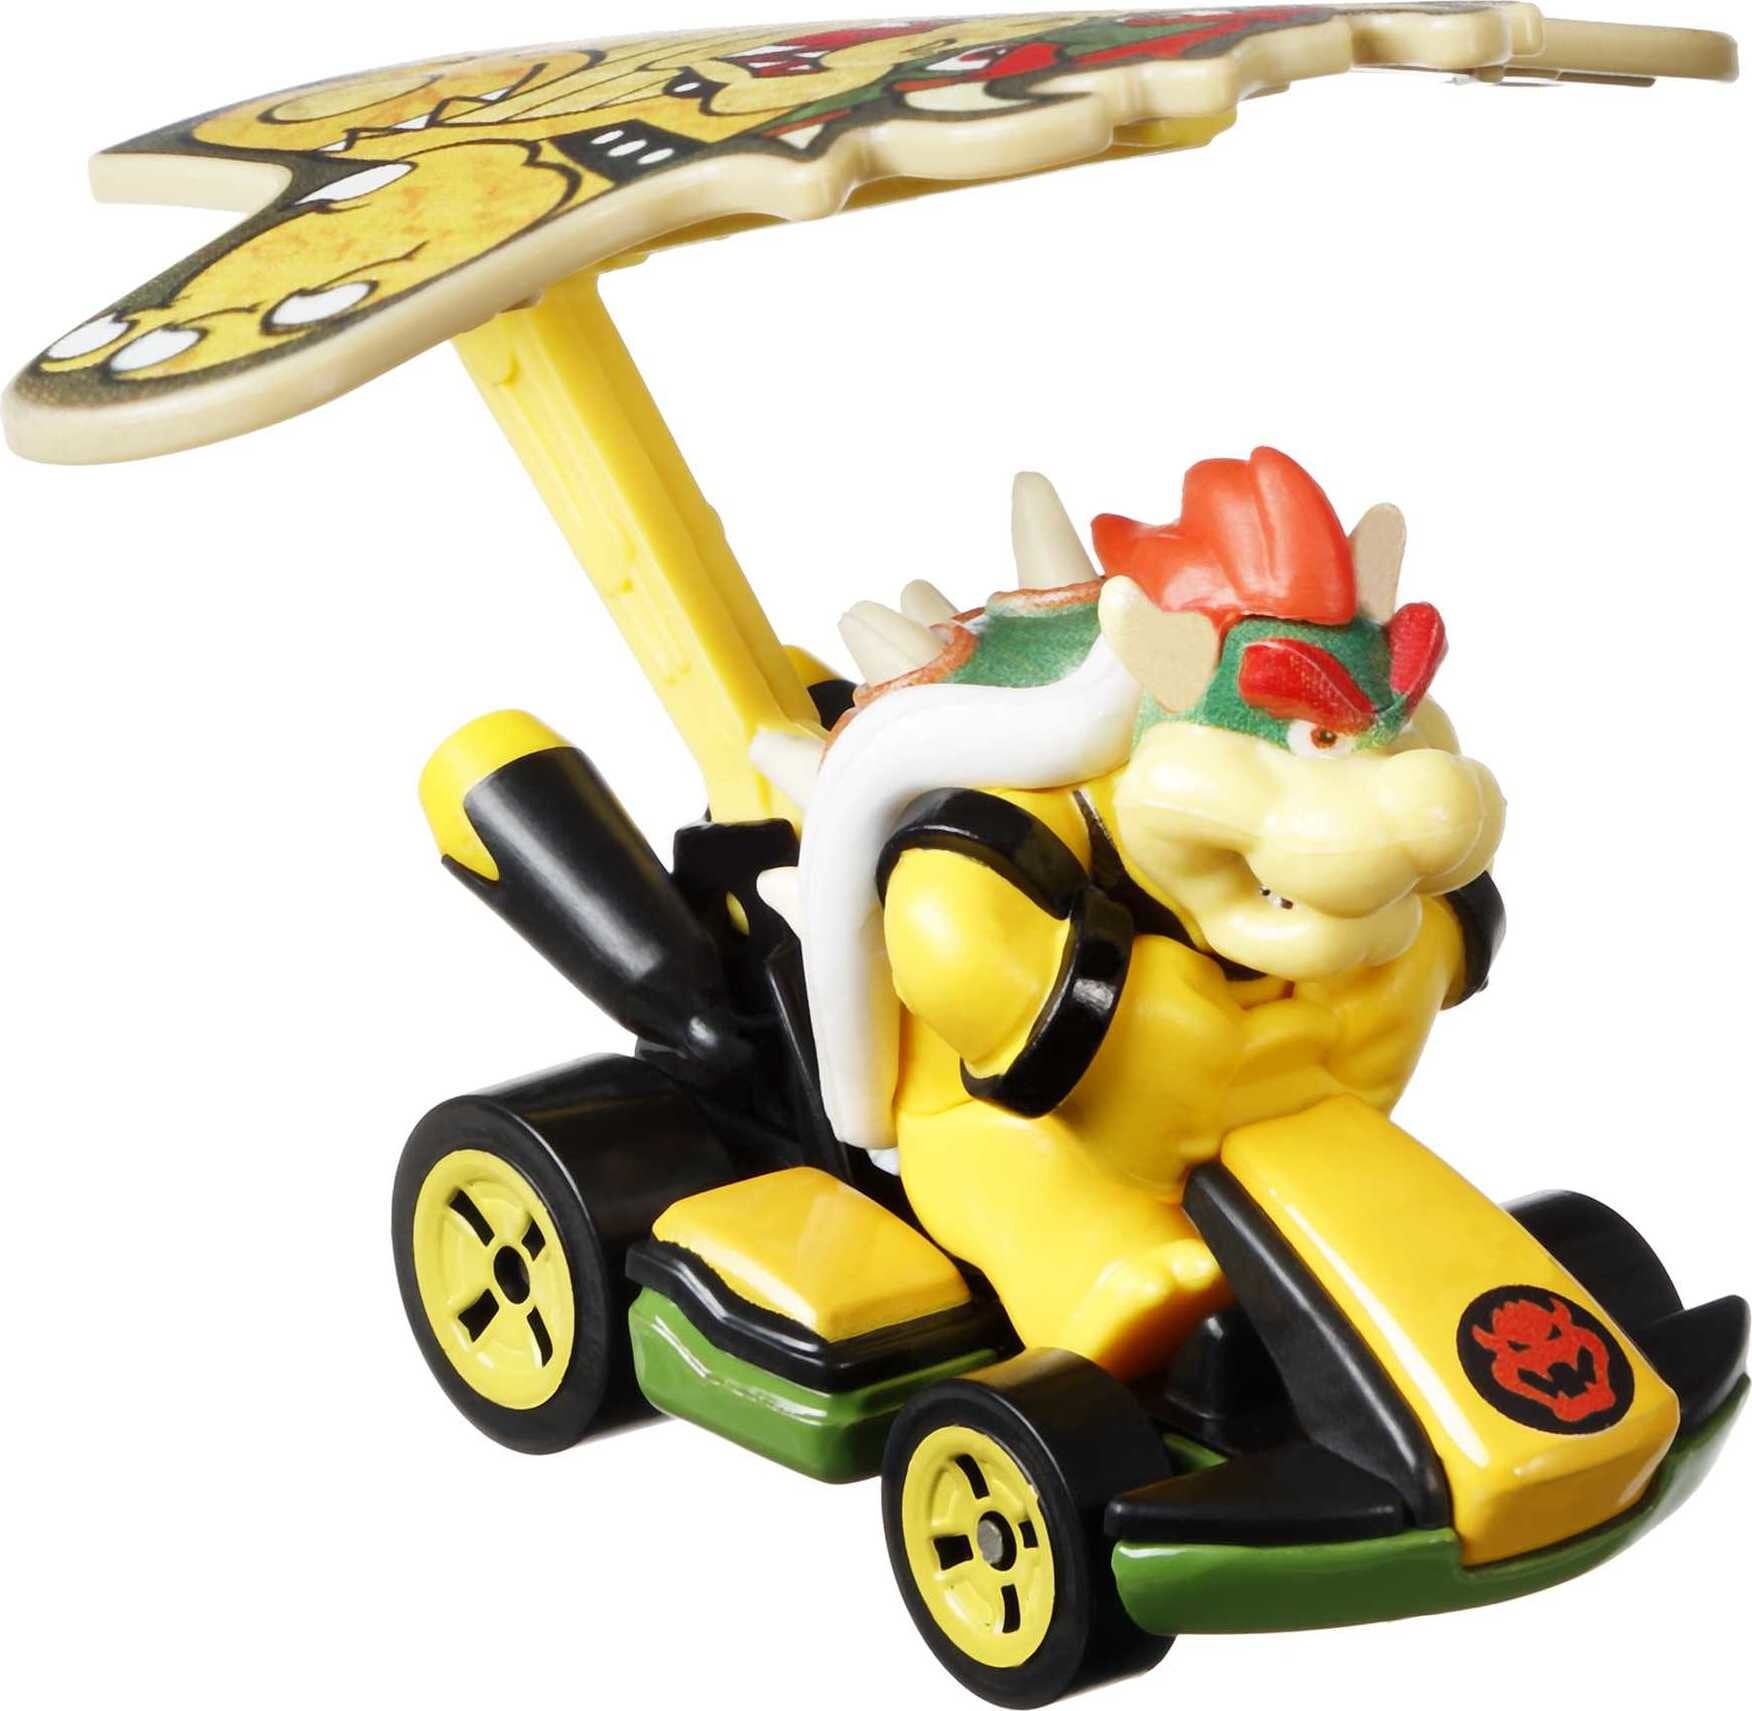 Mattel® Hot Wheels® Mario Kart™ Dry Bowser Standard Kart Toy Vehicle, 1 ct  - Kroger